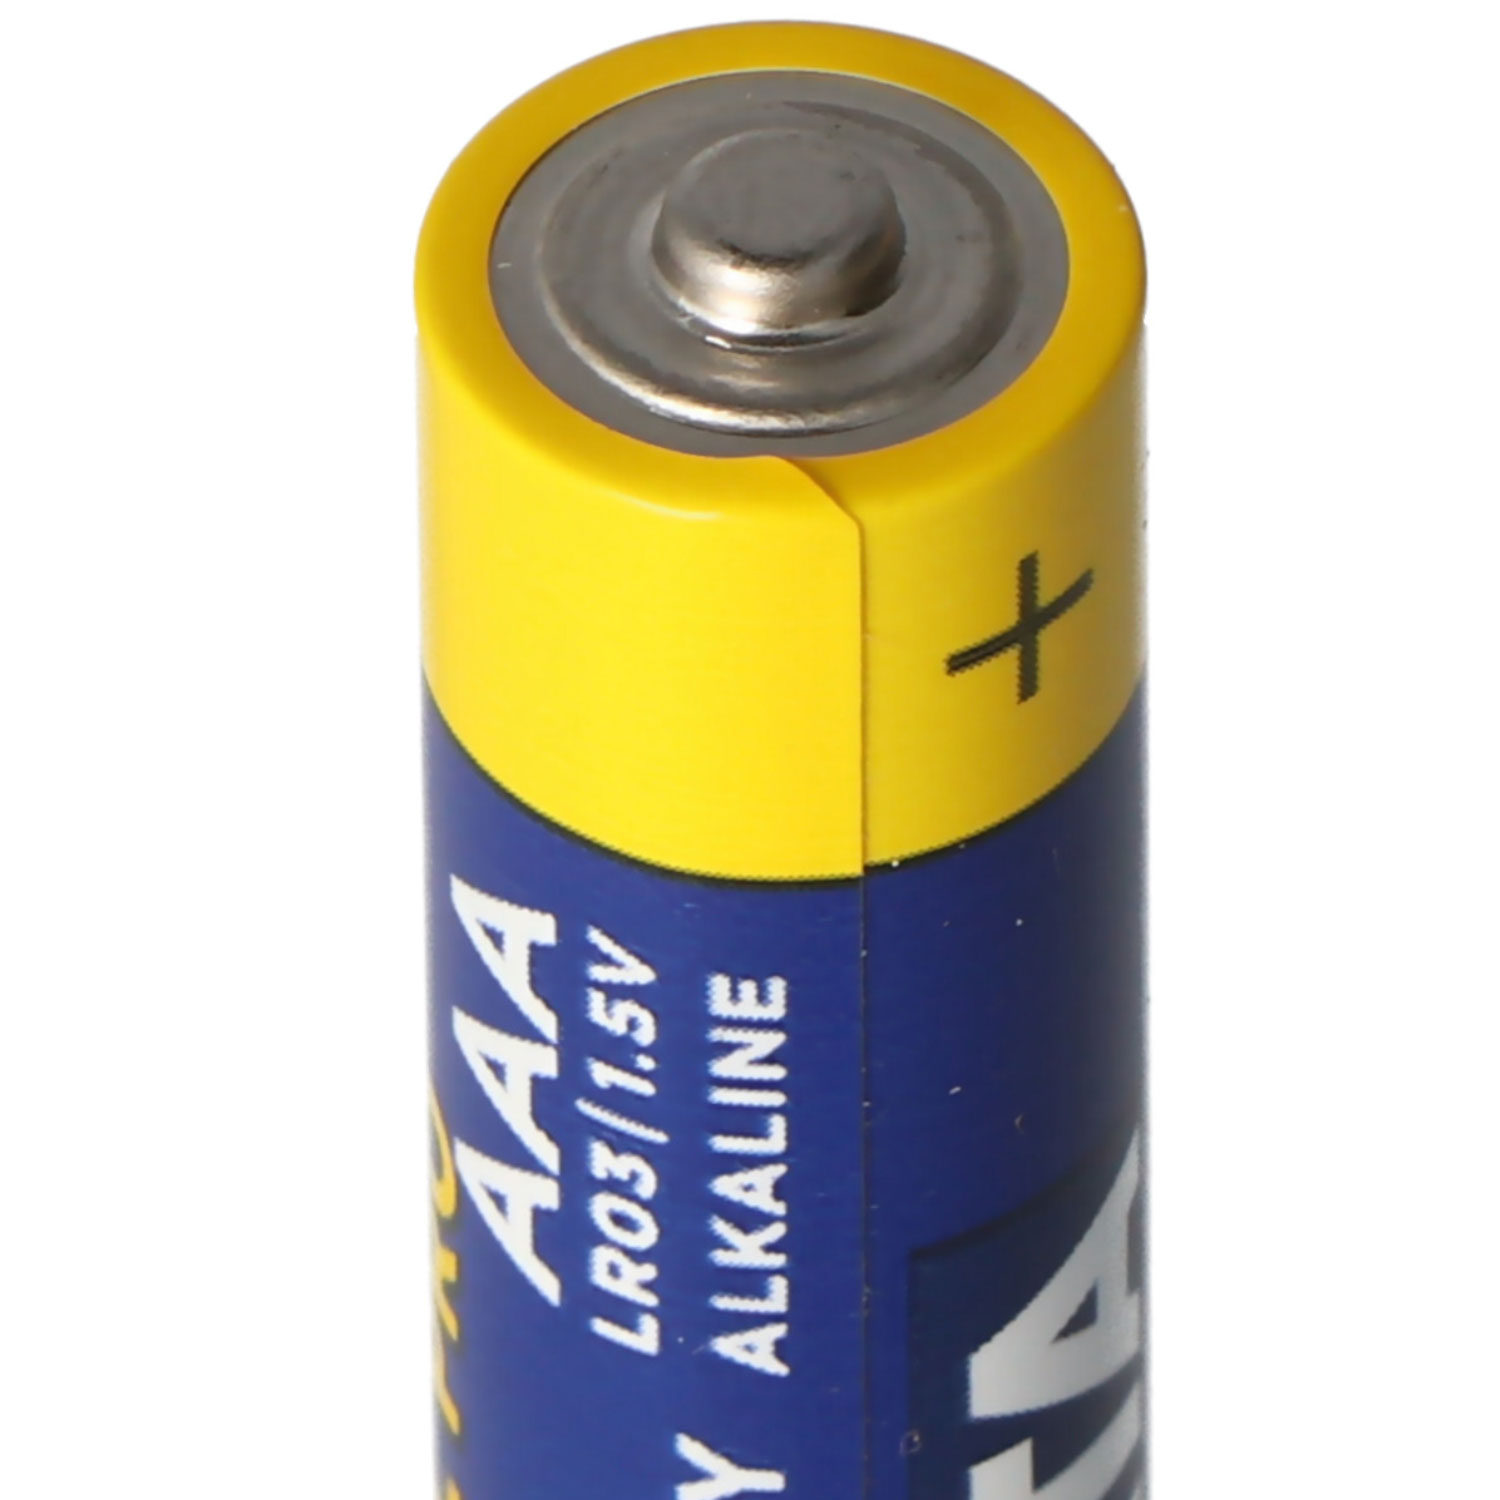 VARTA Industrial Pro Batterie AAA Micro Alkaline LR03 2er Folie Pack